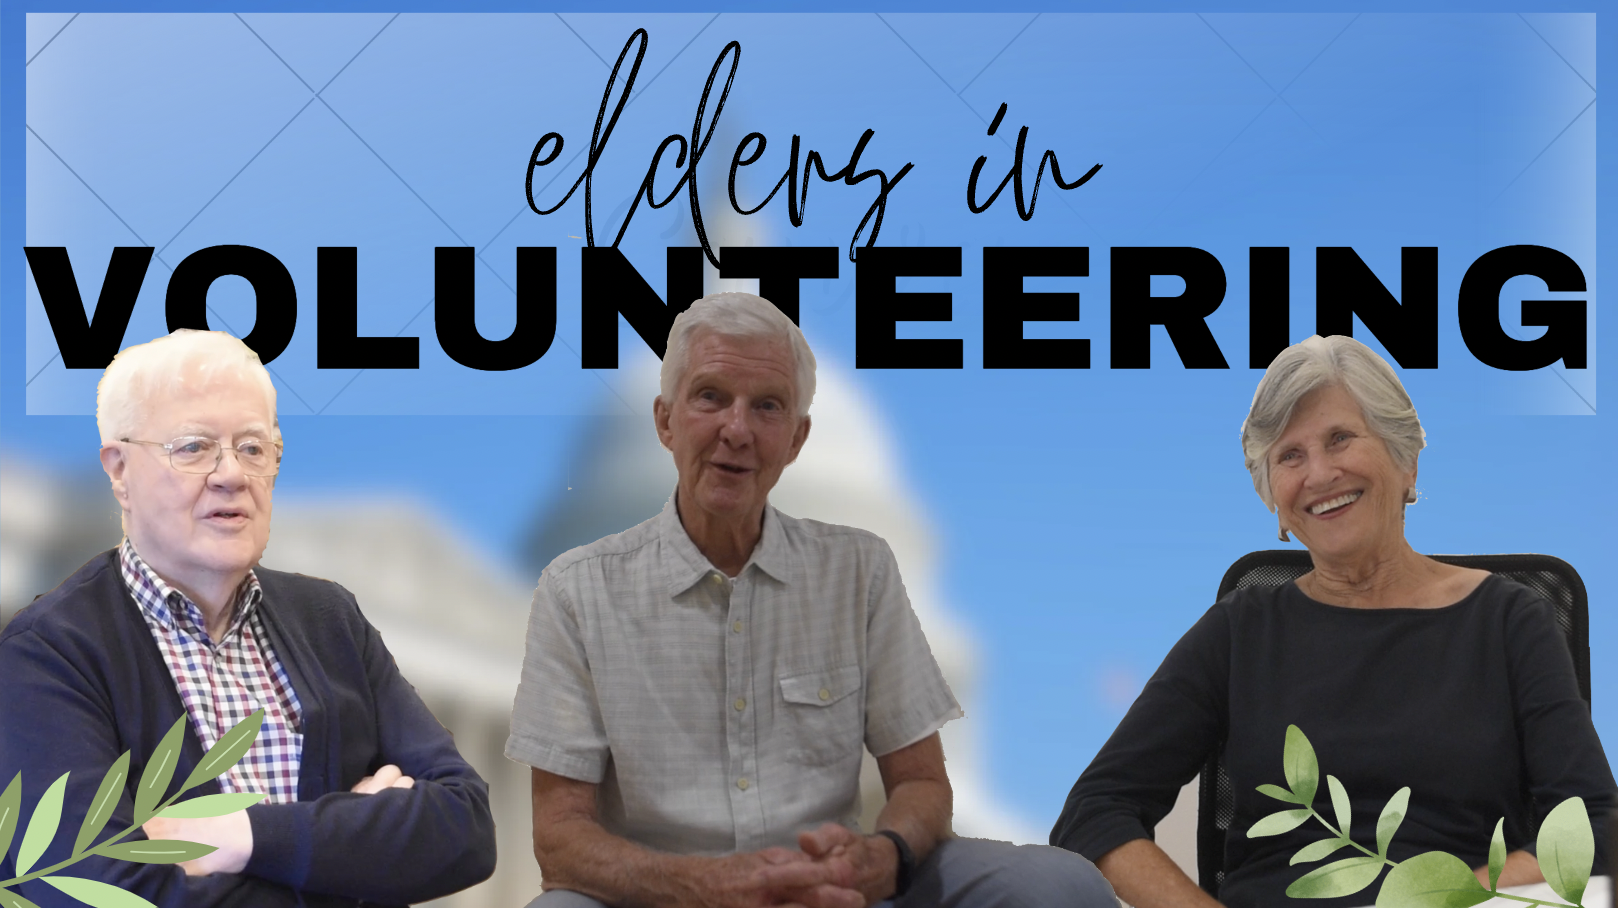 Elders in volunteering